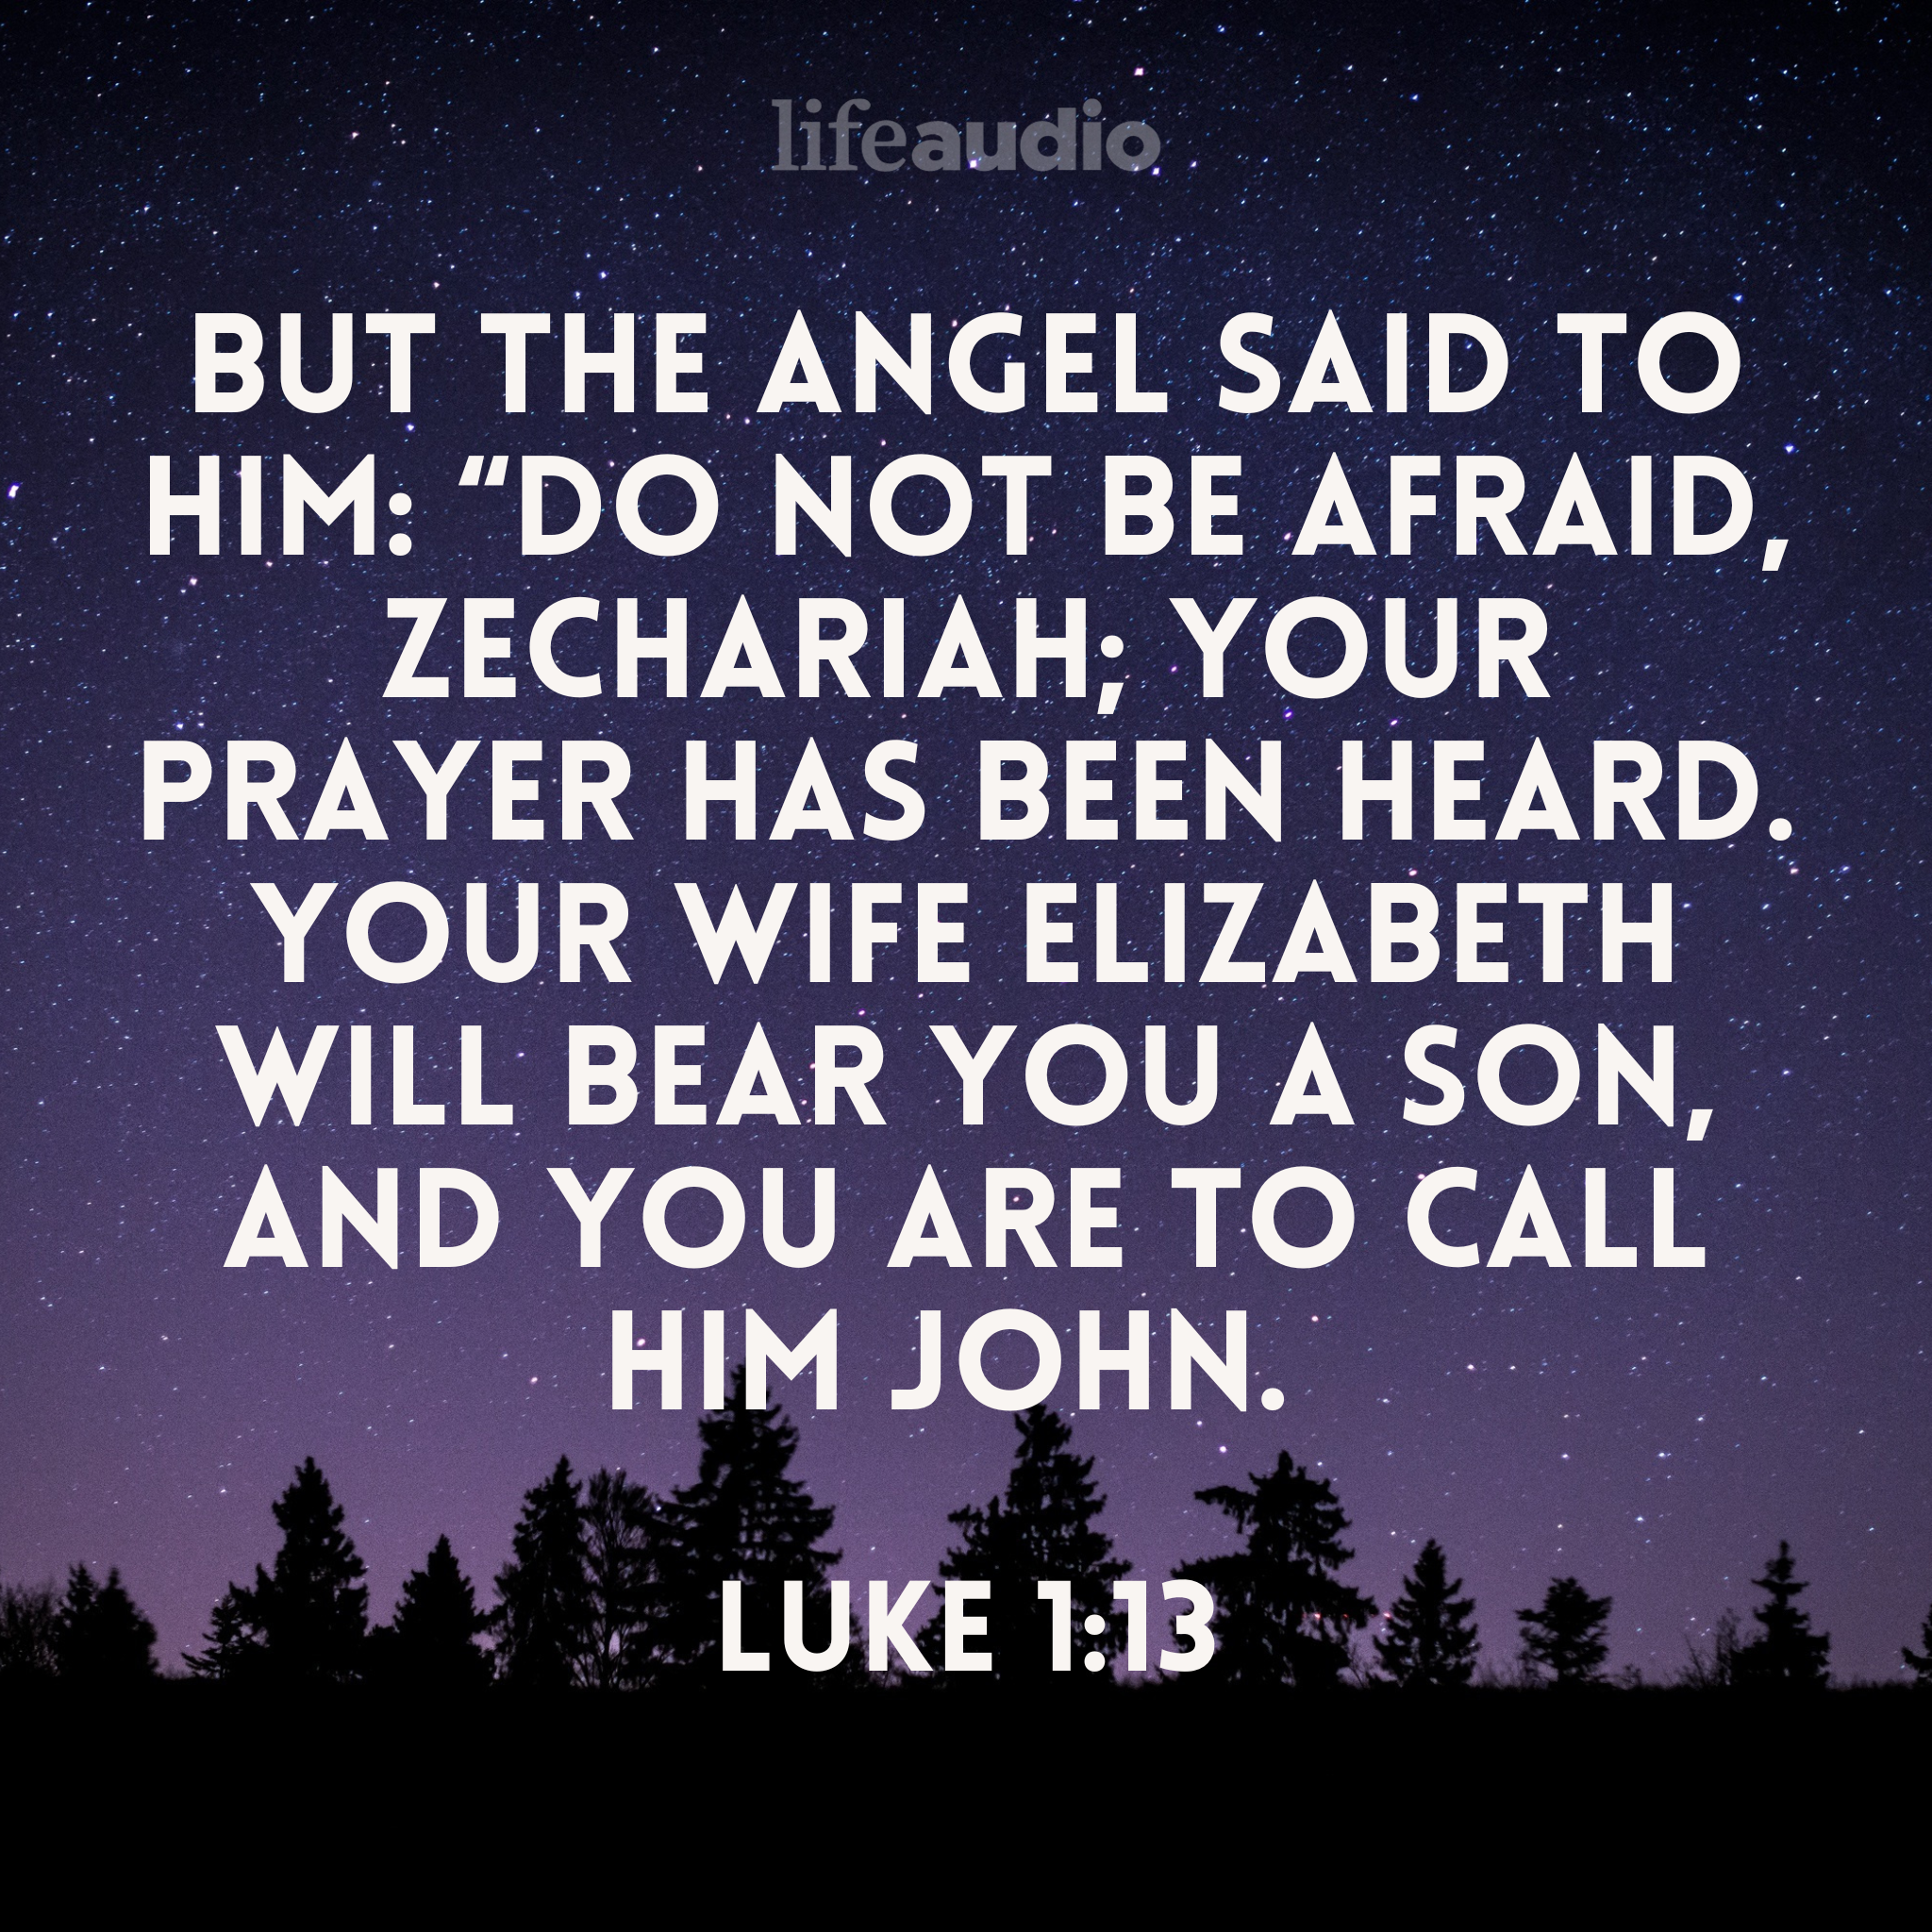 Your Prayers Have Been Heard (Luke 1:13)